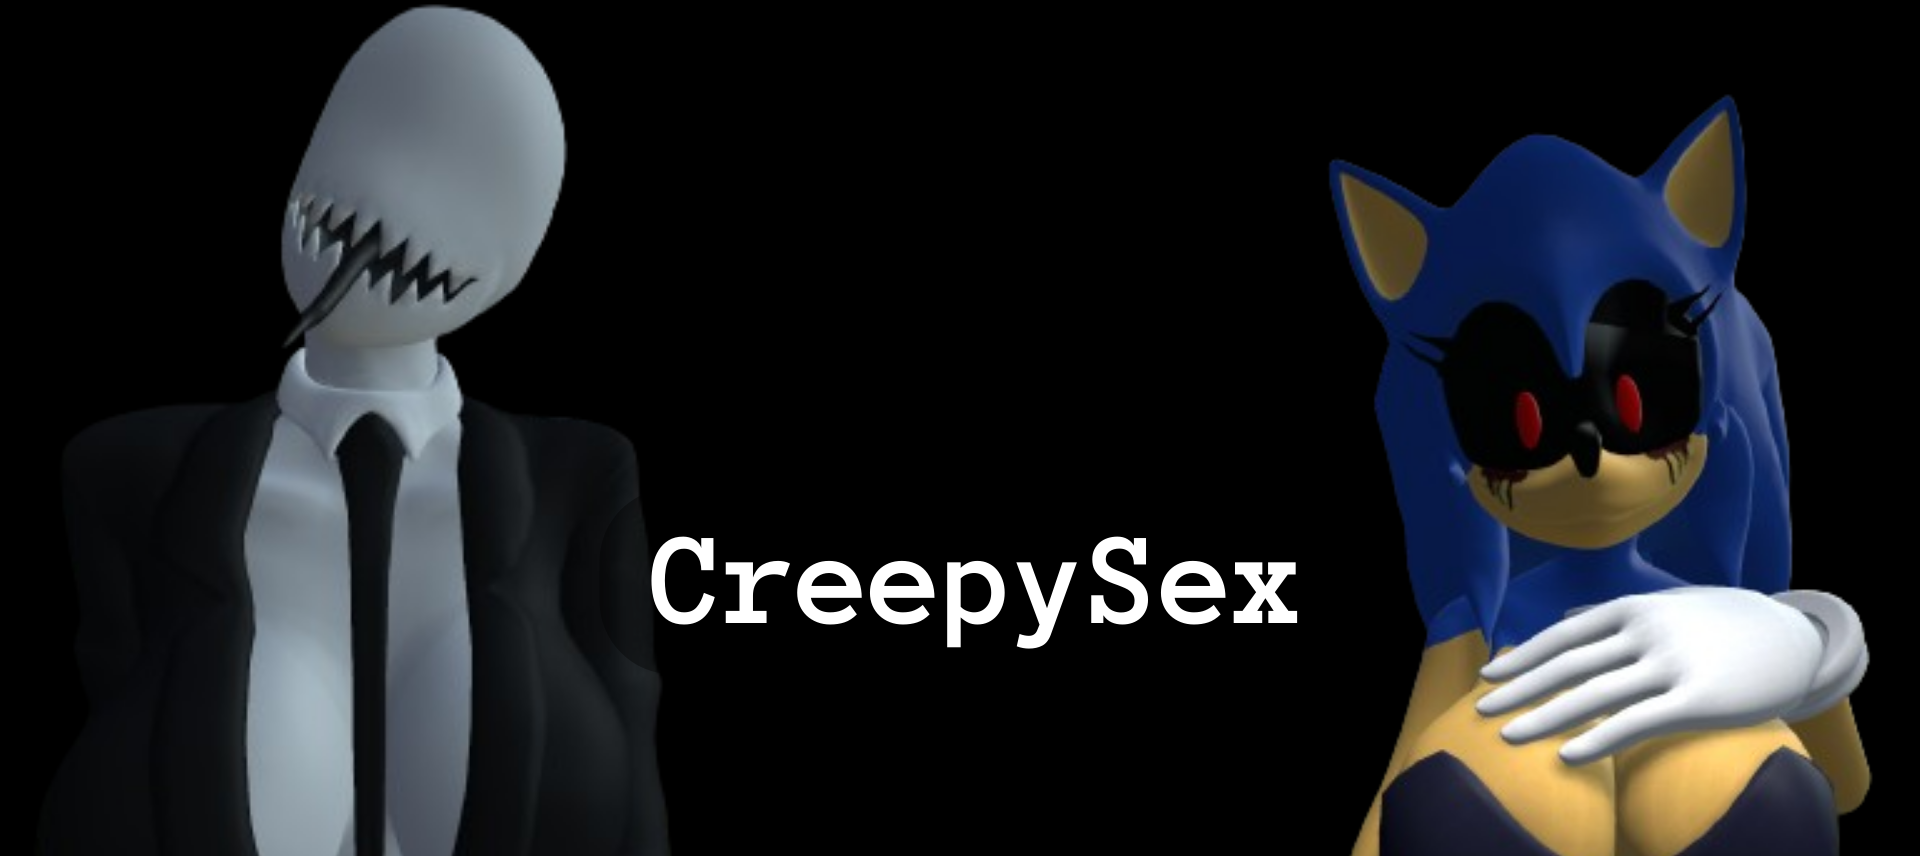 Creepysex